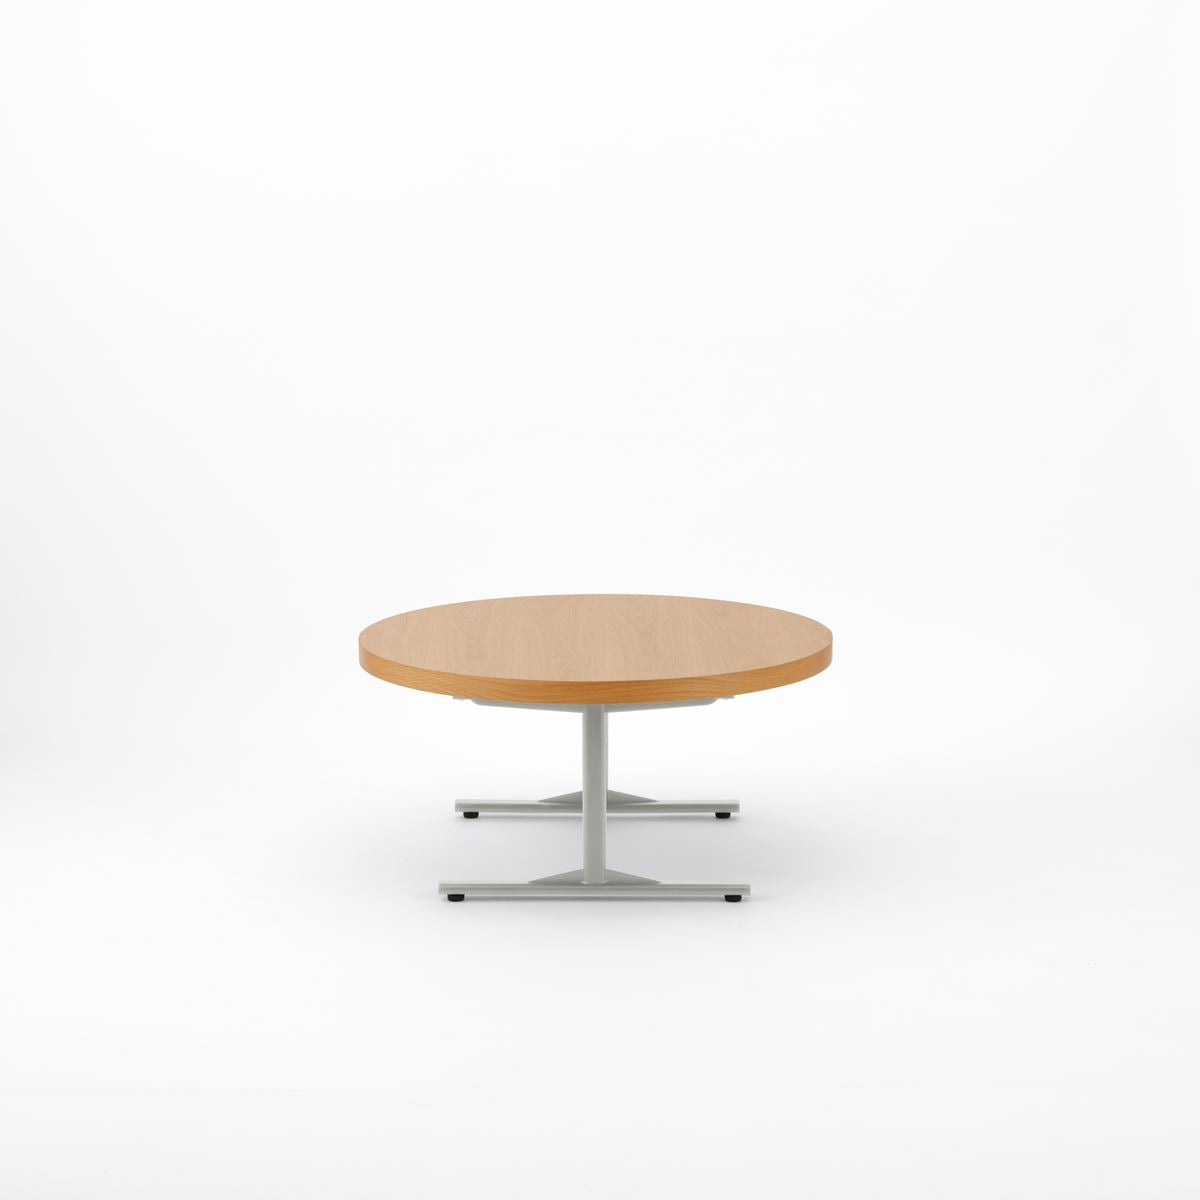 KUUM Living Table Φ850 - オーク突板ナチュラル / クーム  リビング テーブル